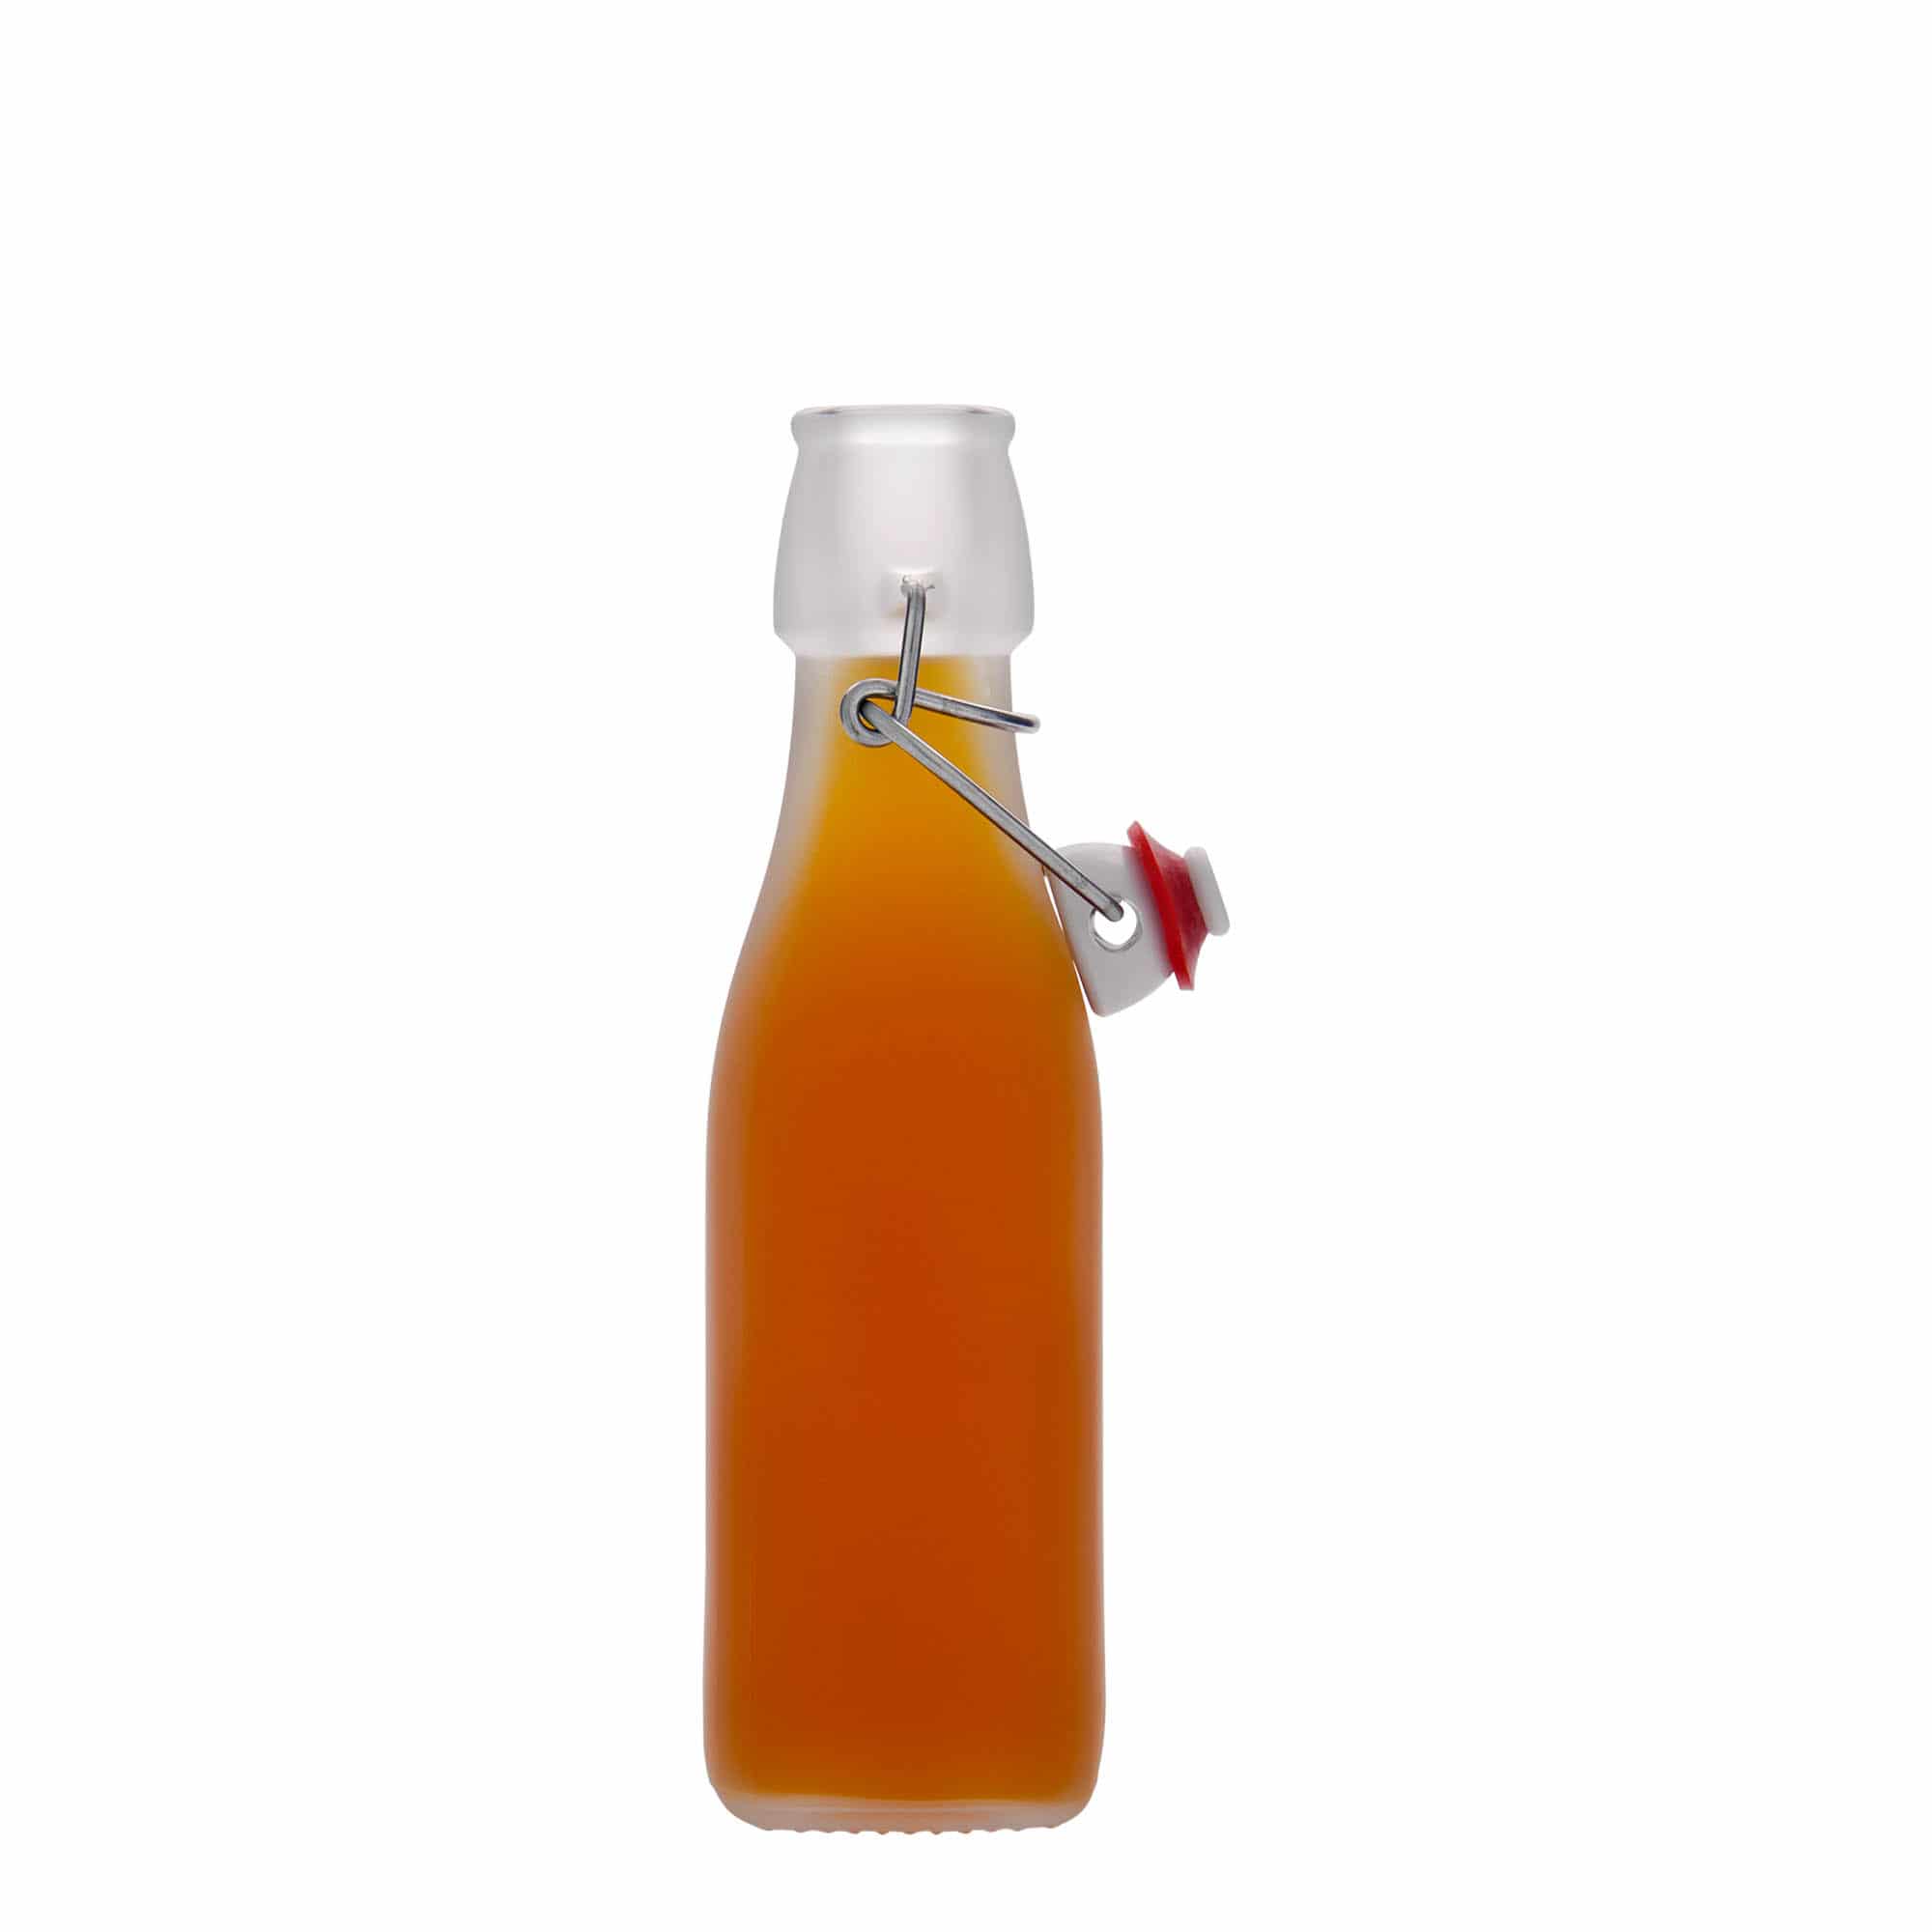 250 ml glass bottle 'Swing', square, white, closure: swing top